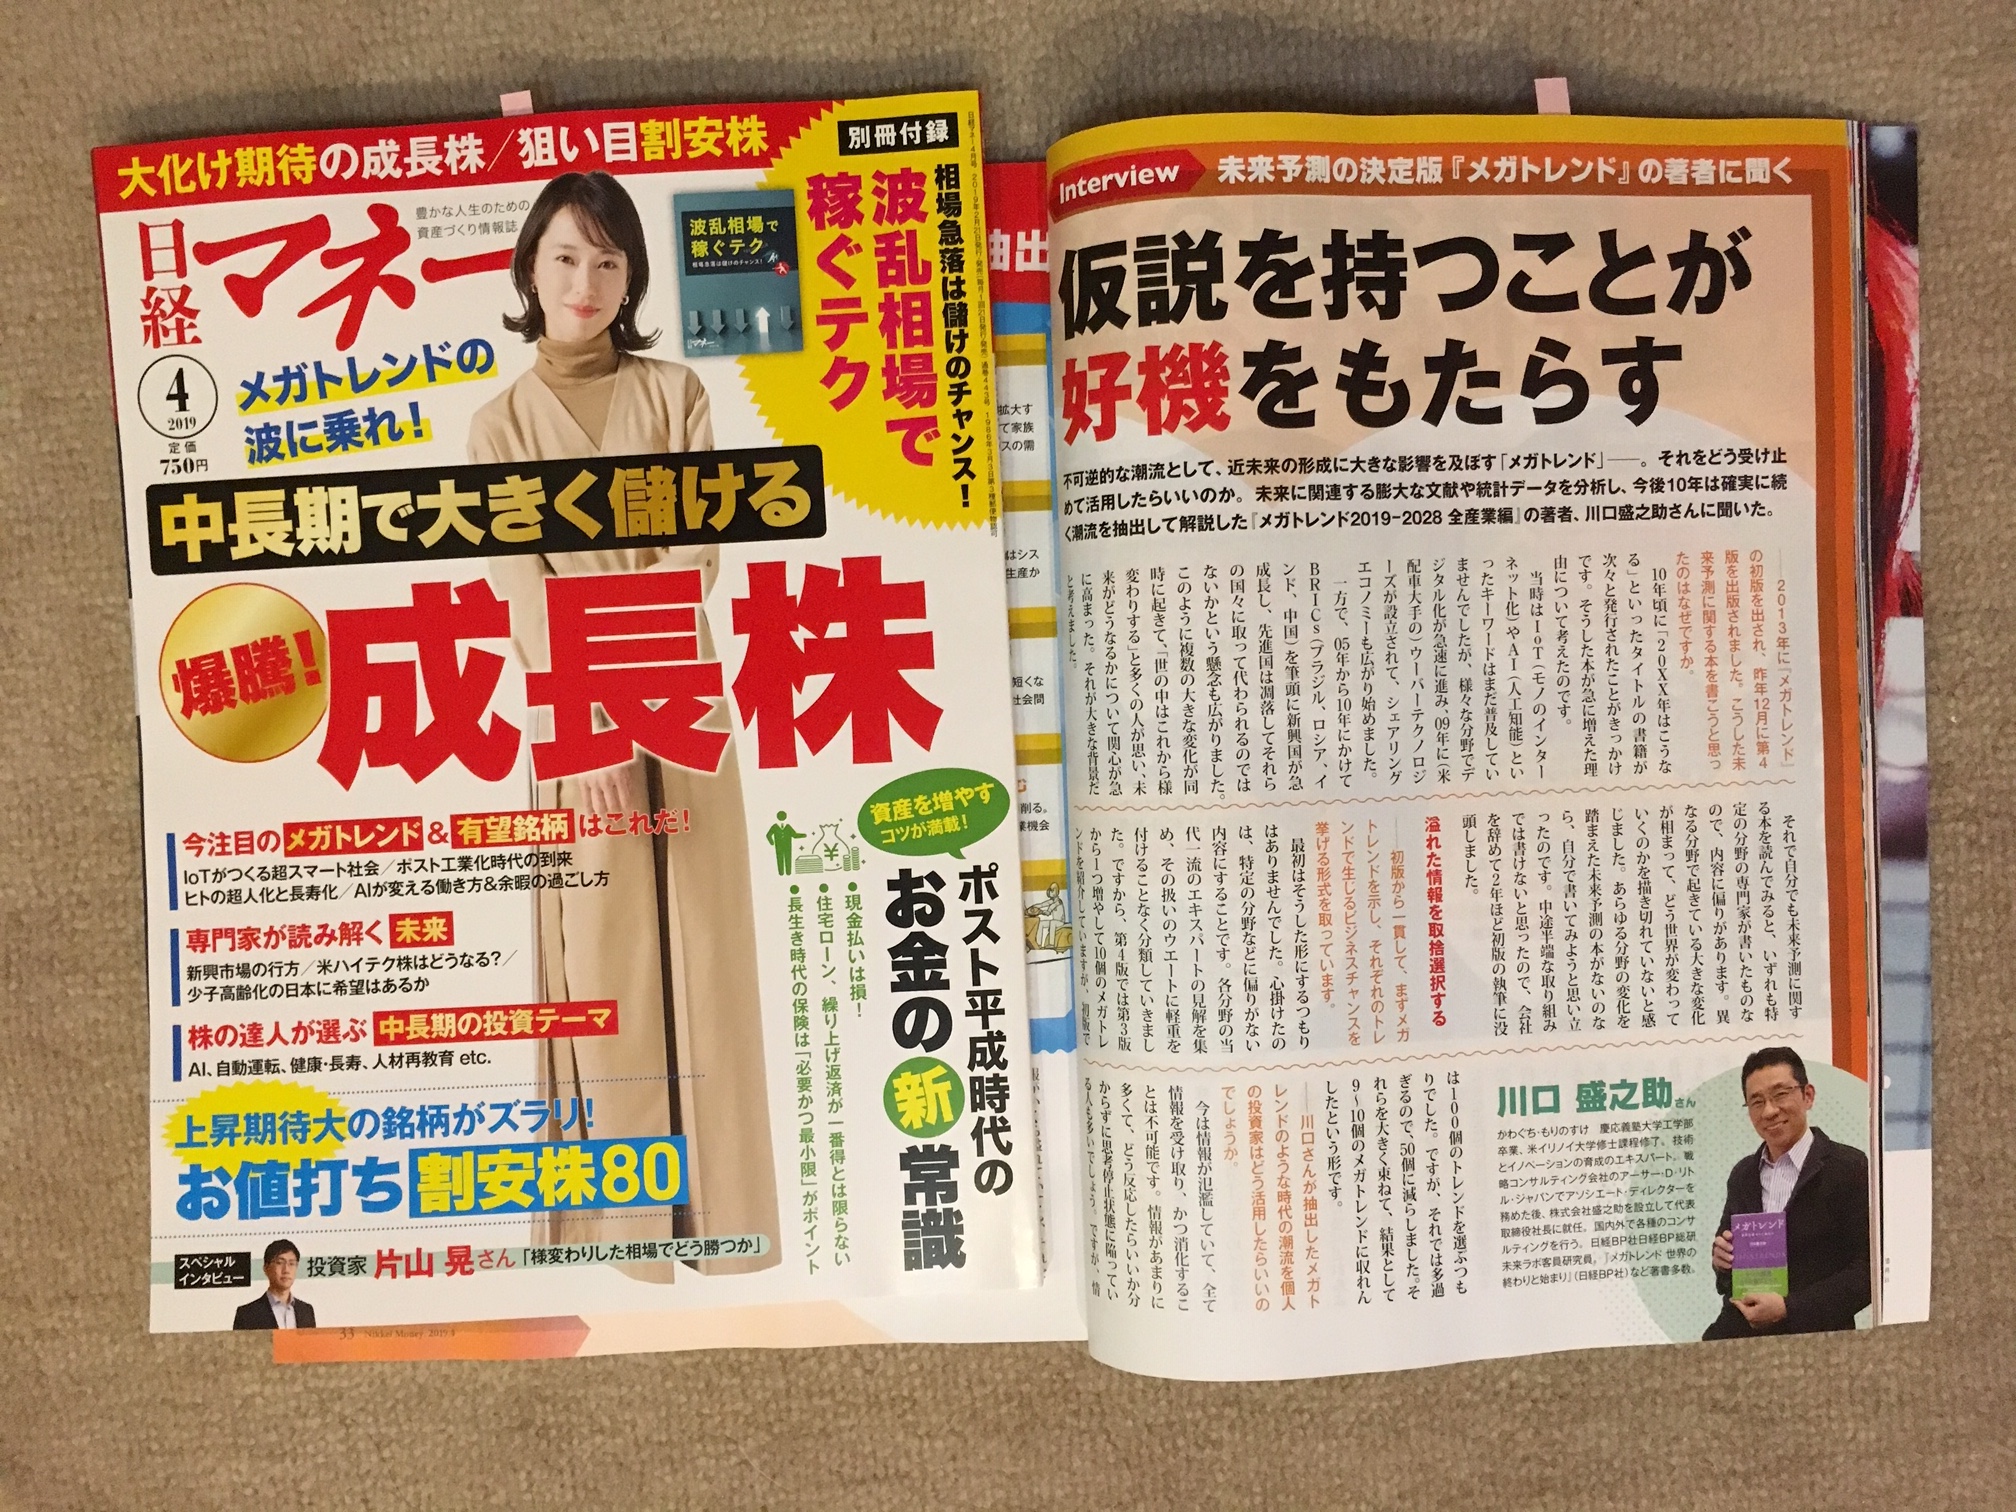 Nikkei Money Feature Article On Morinosuke S Megatrends Book Morinosuke Kawaguchi